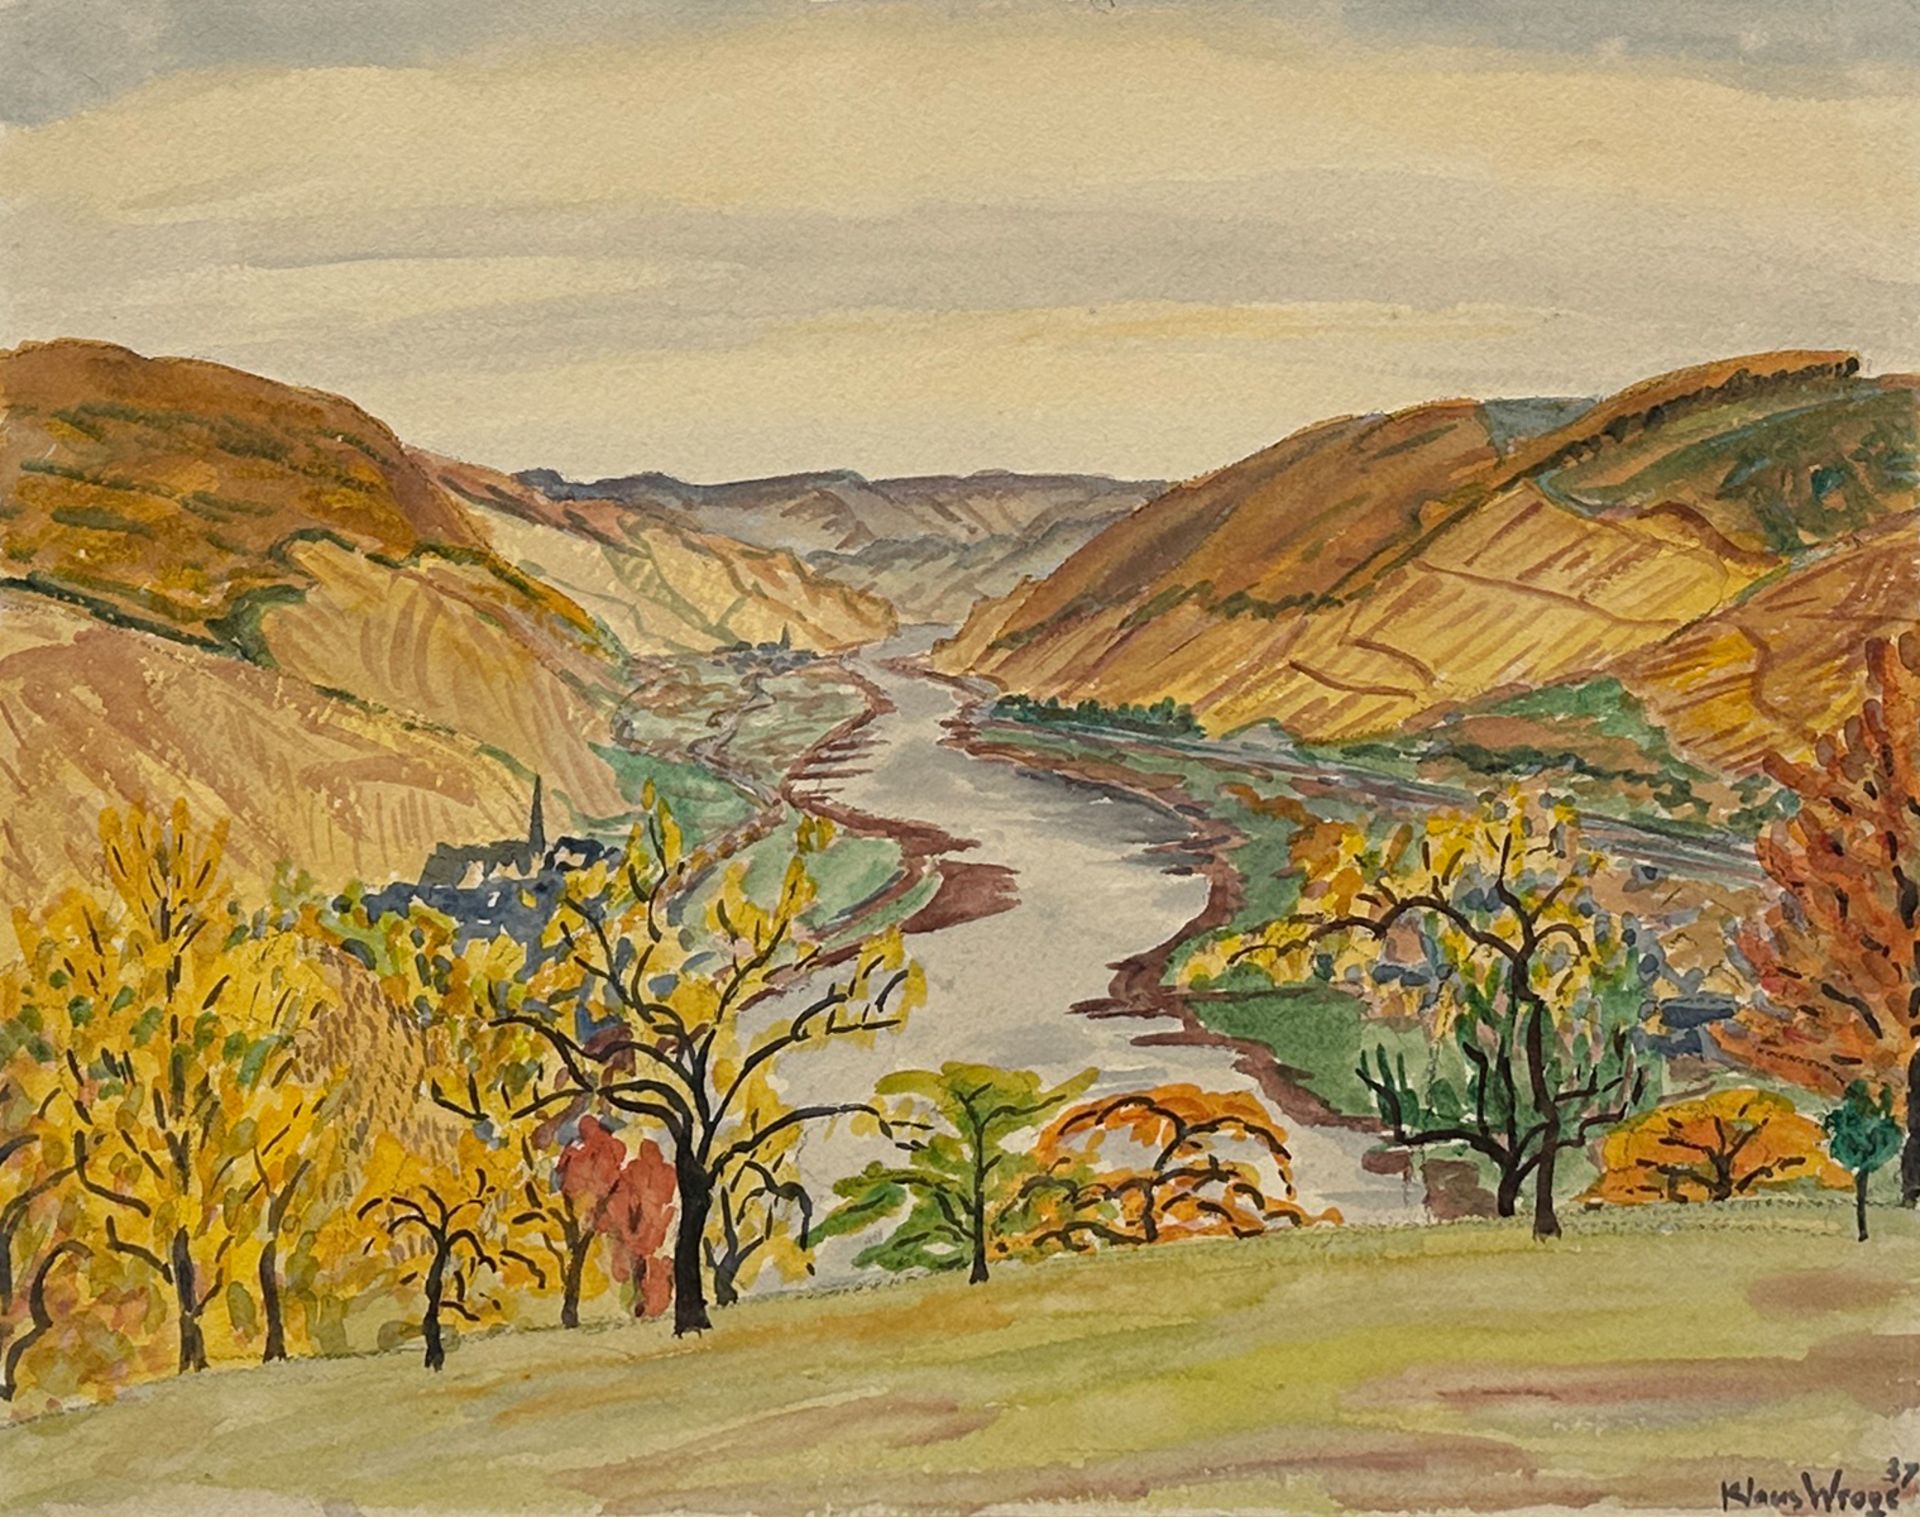 Klaus WRAGE (1937). Flusslandschaft im Herbst. 1937.